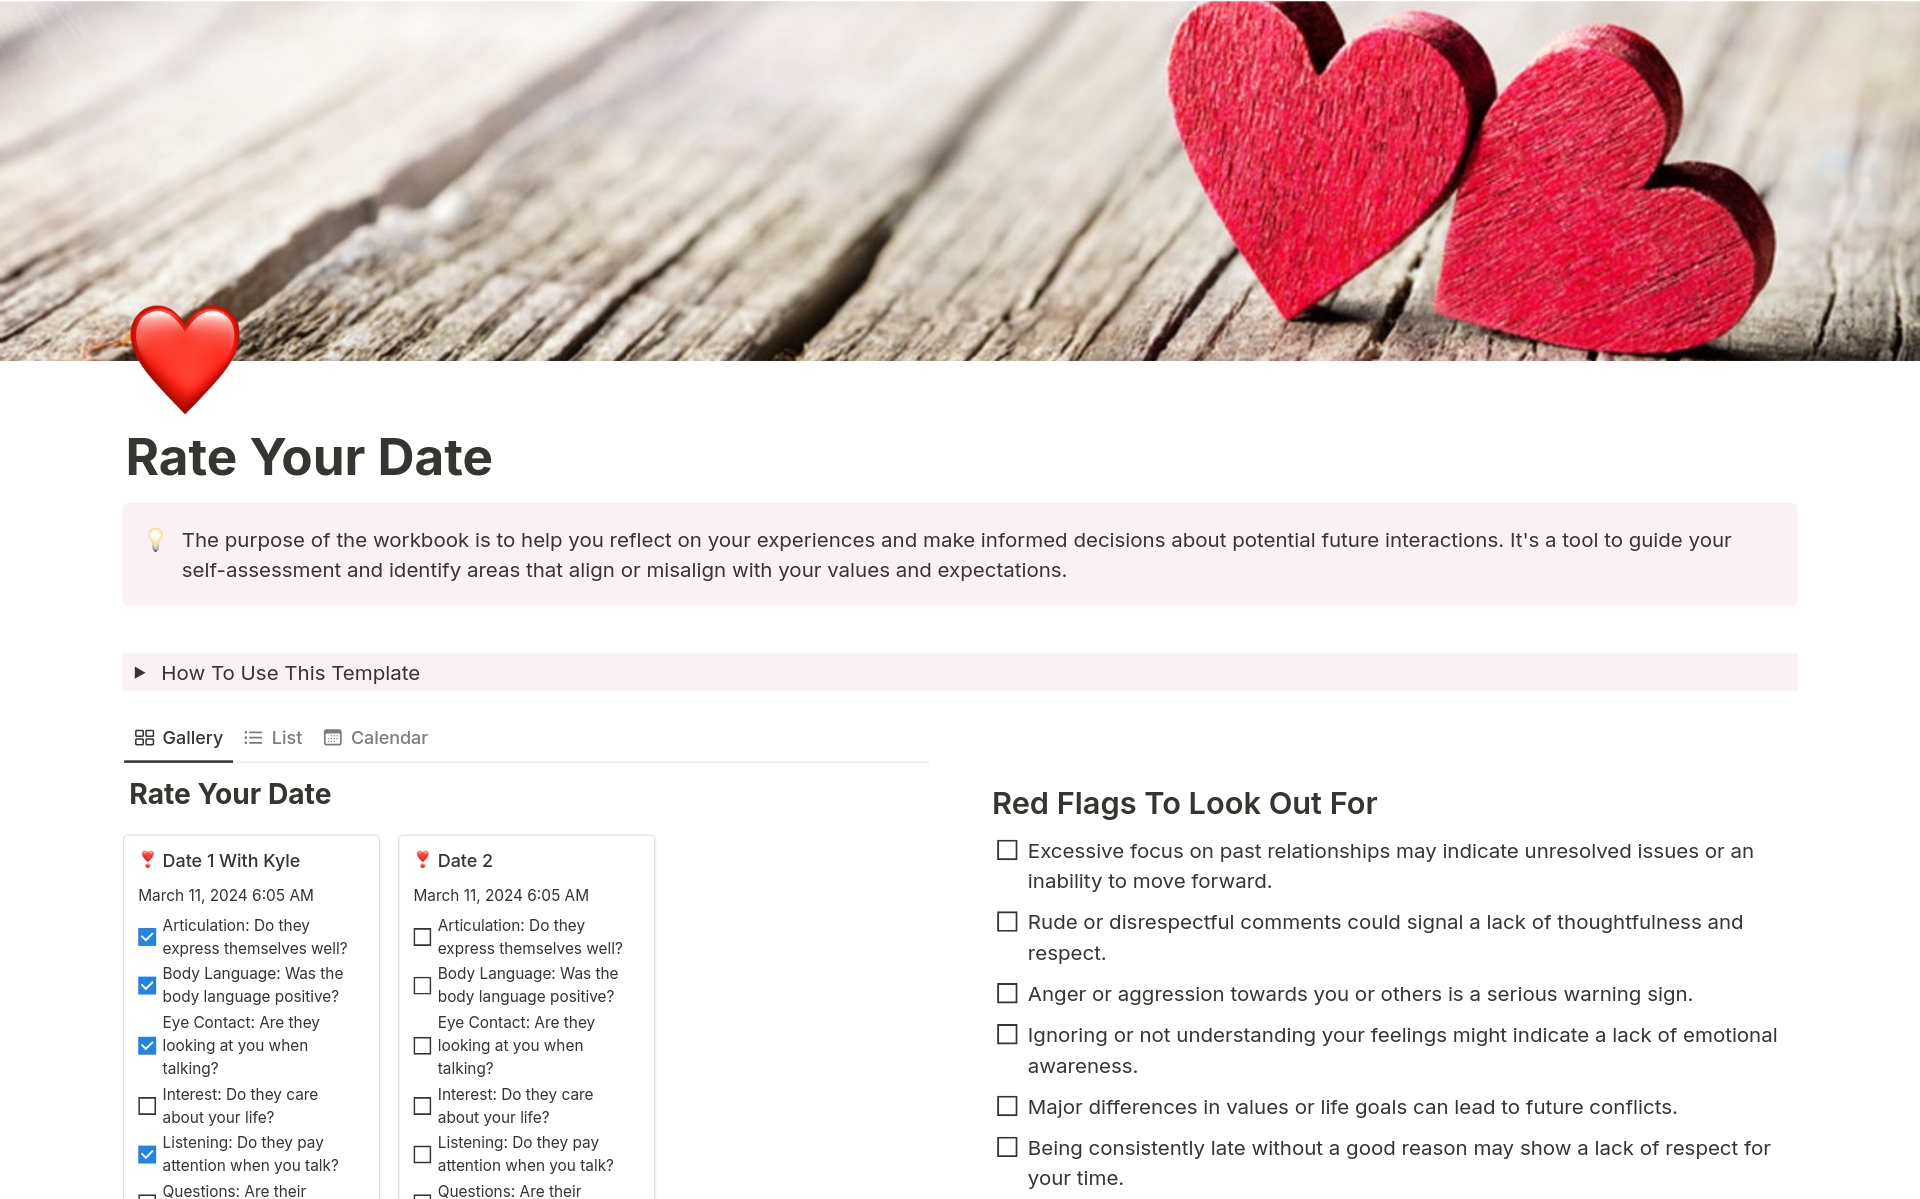 Vista previa de una plantilla para Rate Your Date